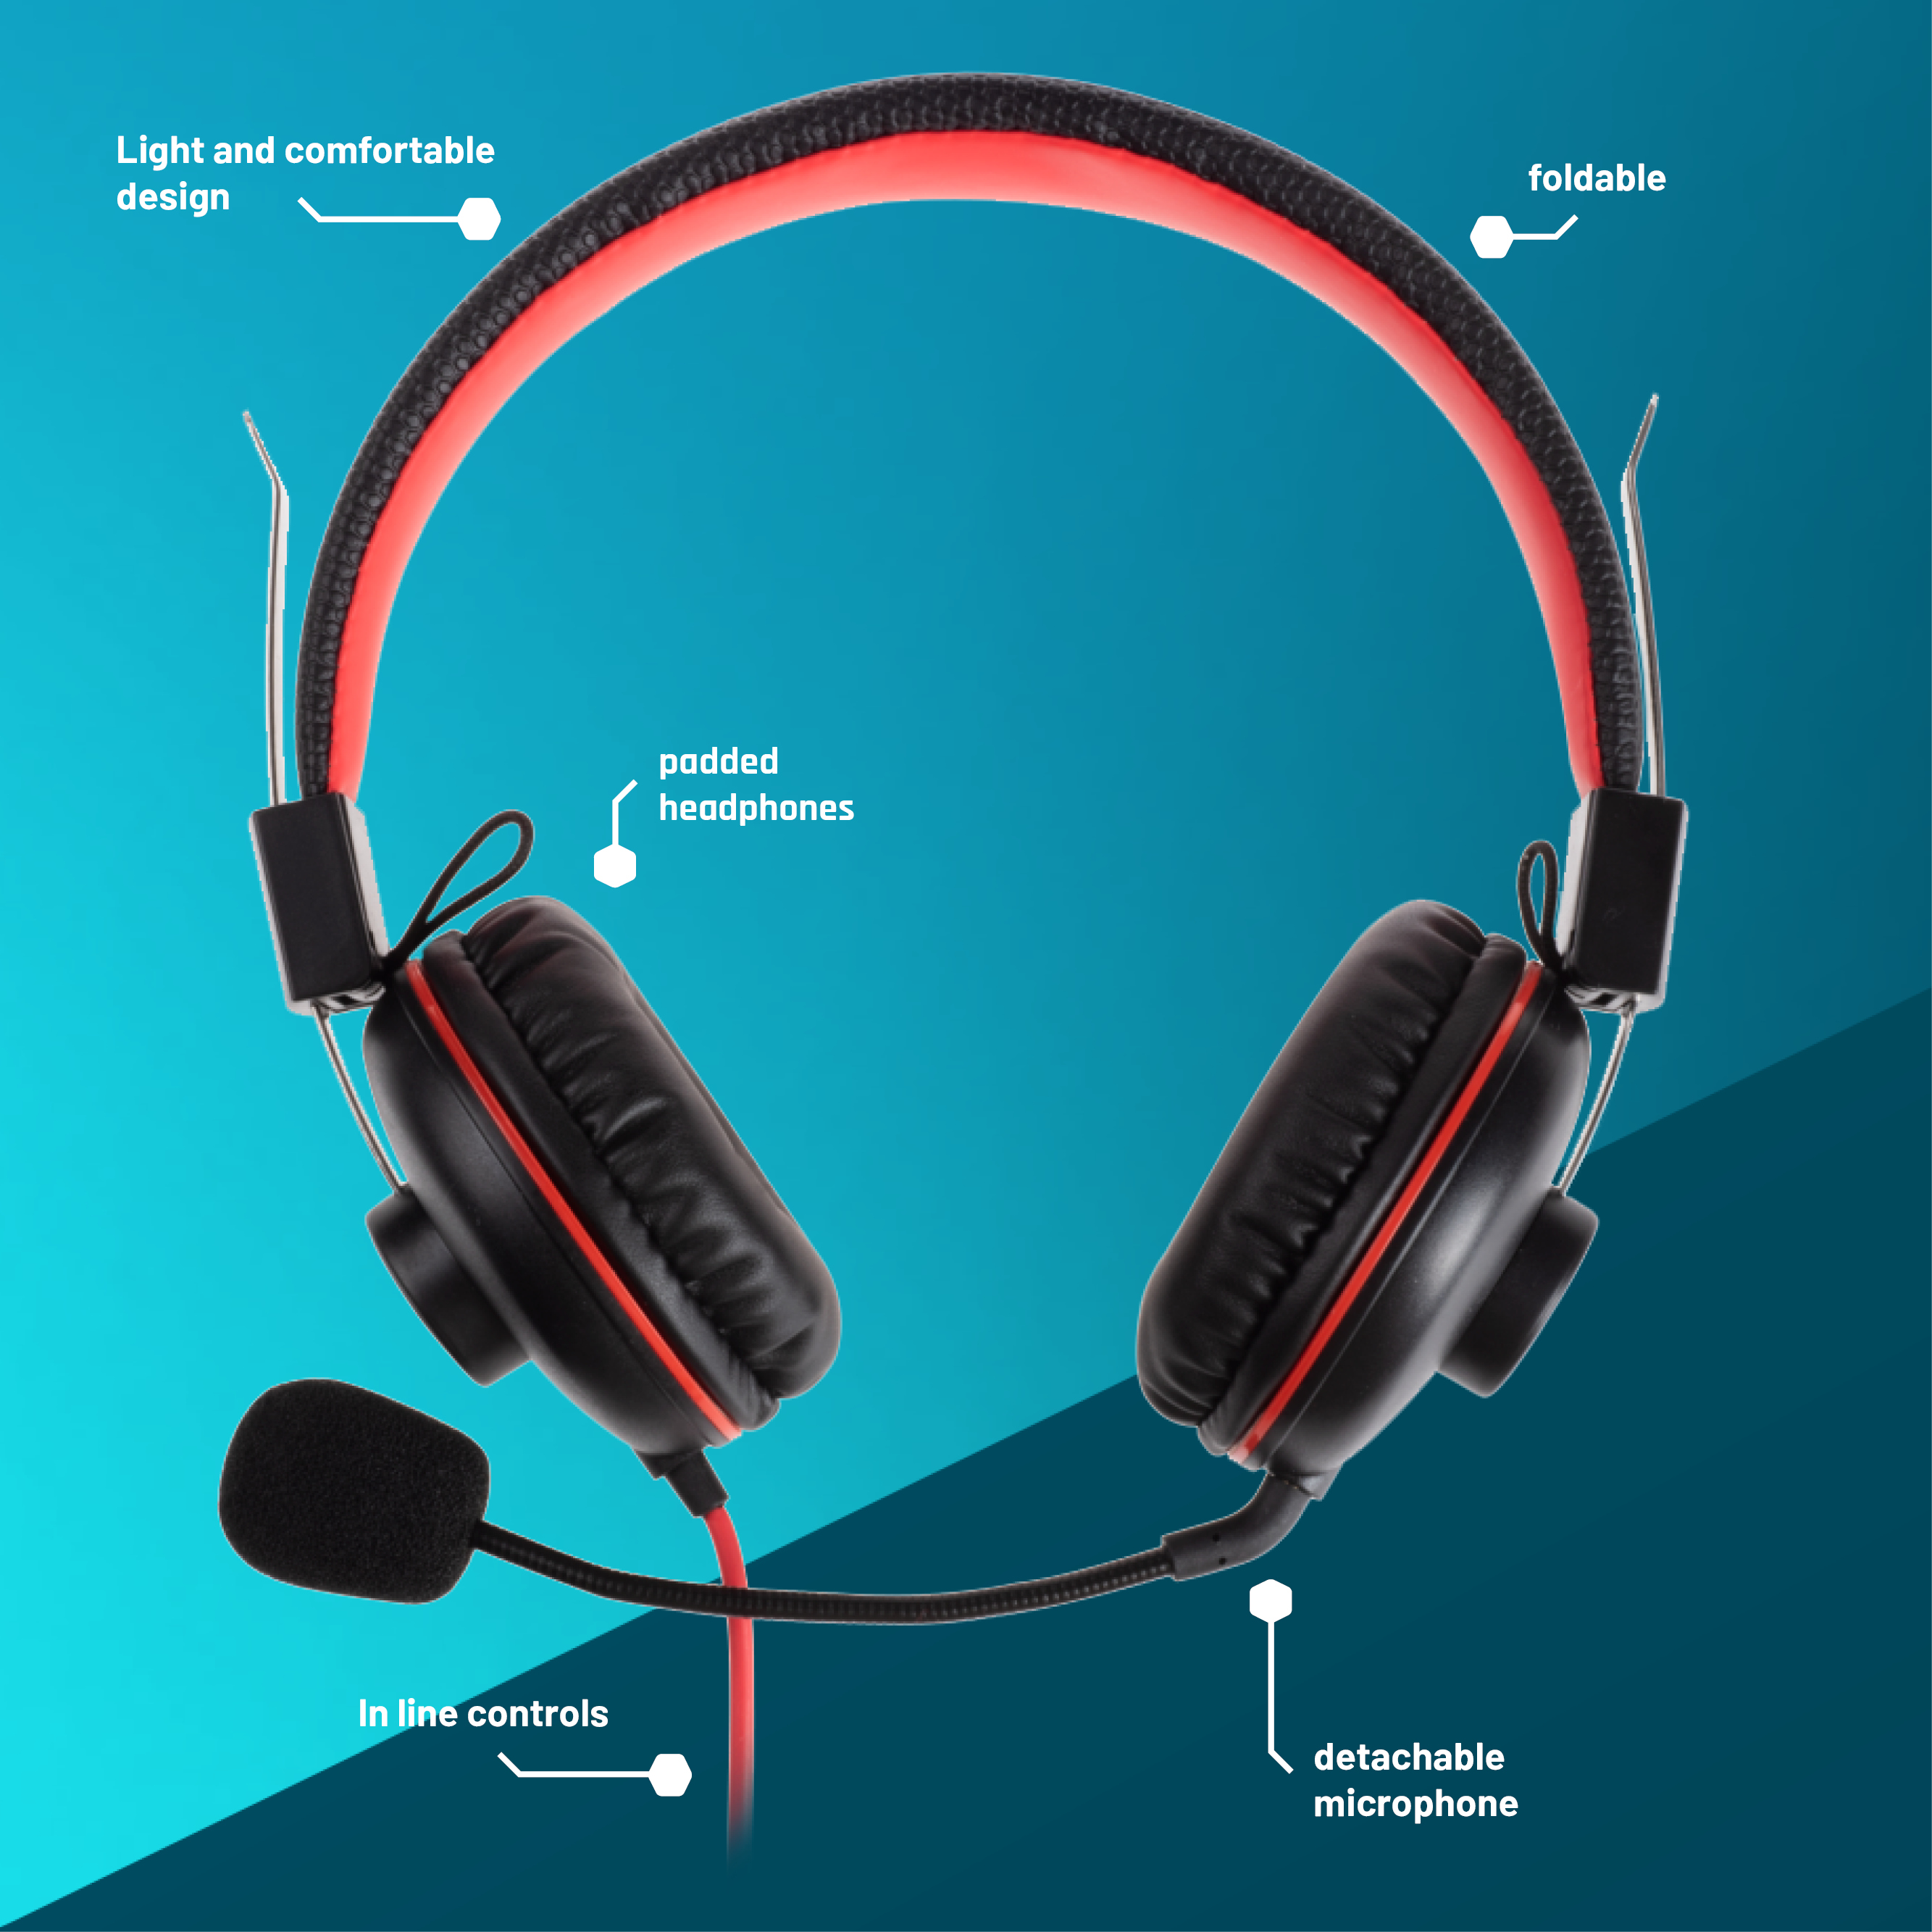 Schwarz-Rot Headset, Universal On-ear Gaming Headset GEEKHOME